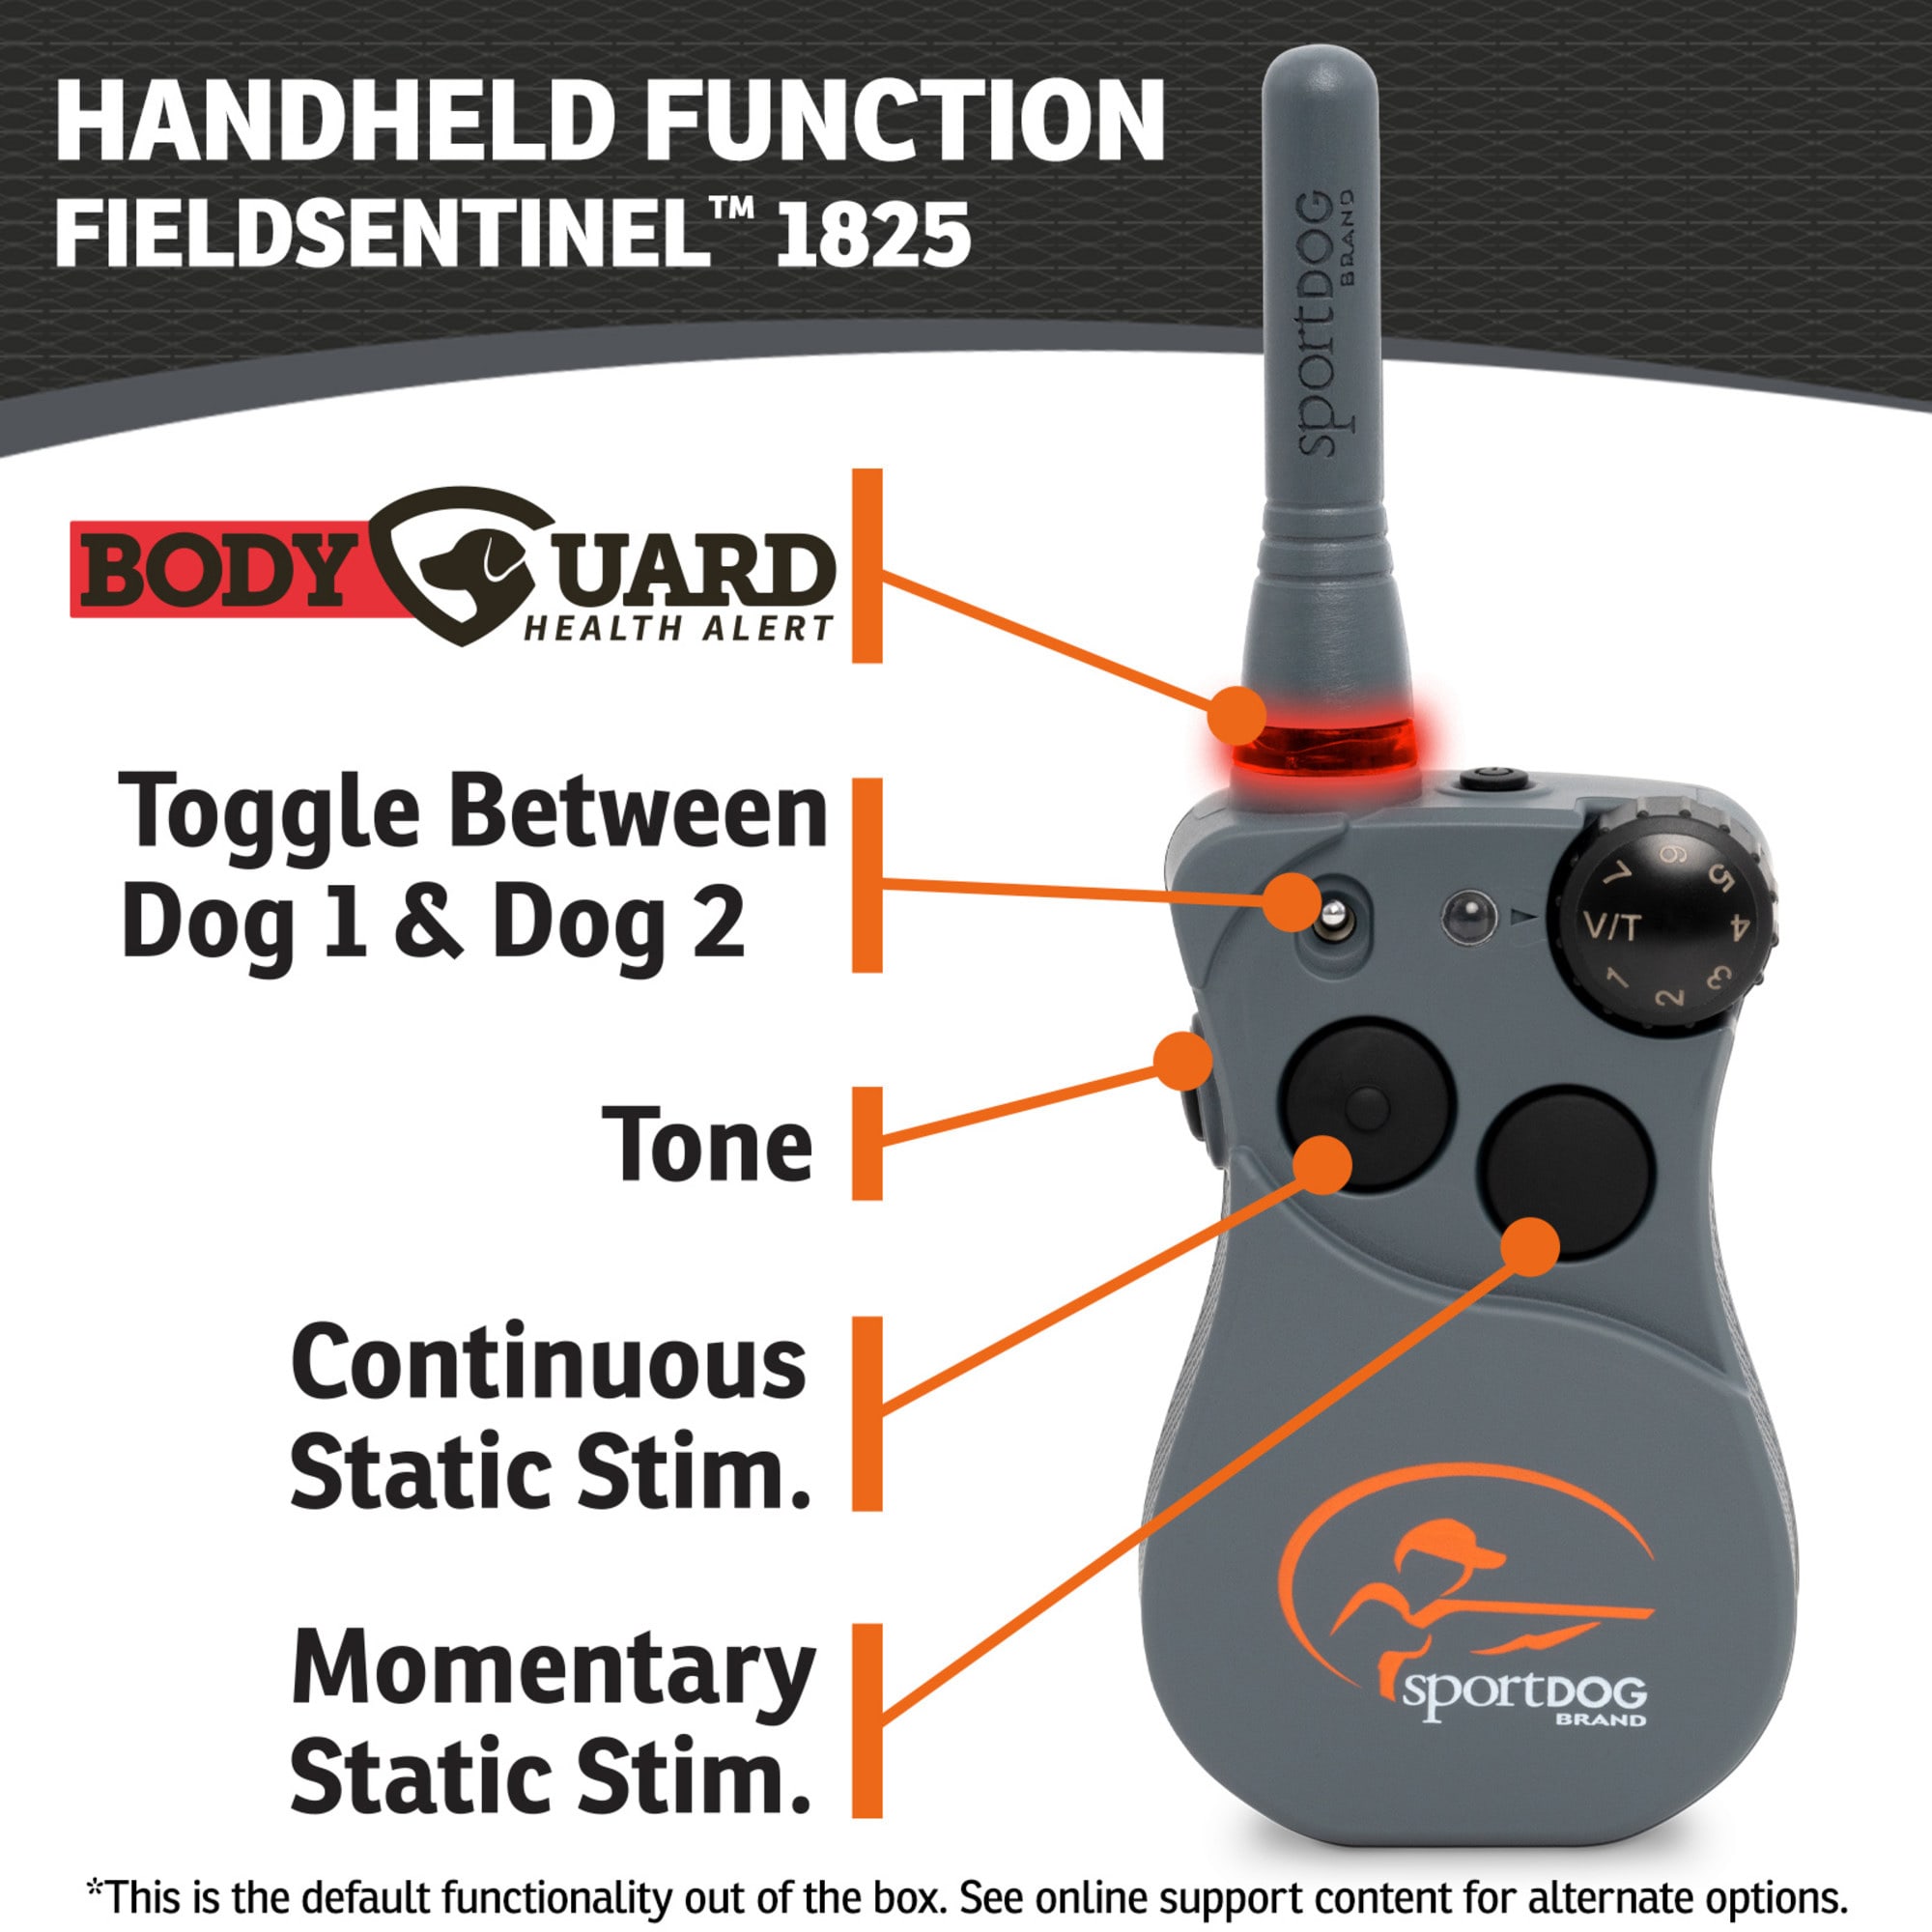 SportDOG Brand® FieldSentinel Electronic Dog-Training System – 1 Mile Range